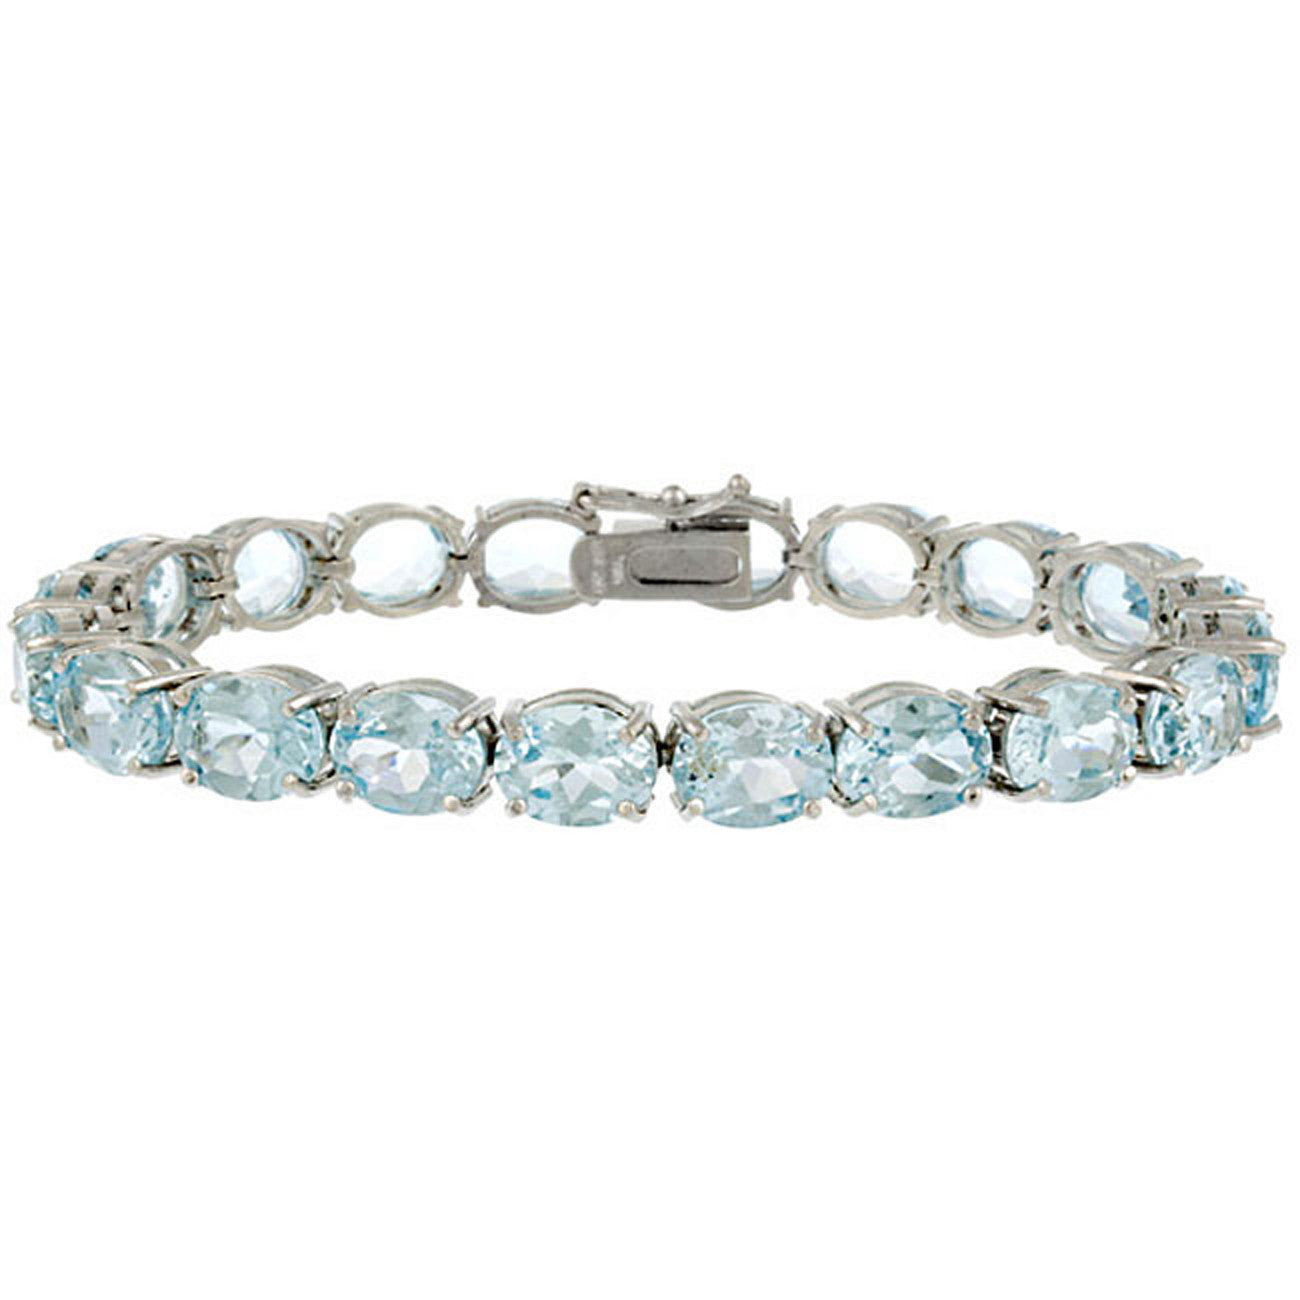 Gemstone Charm Bracelet With Clasp Fastening - Sterling Silver / Blue Topaz